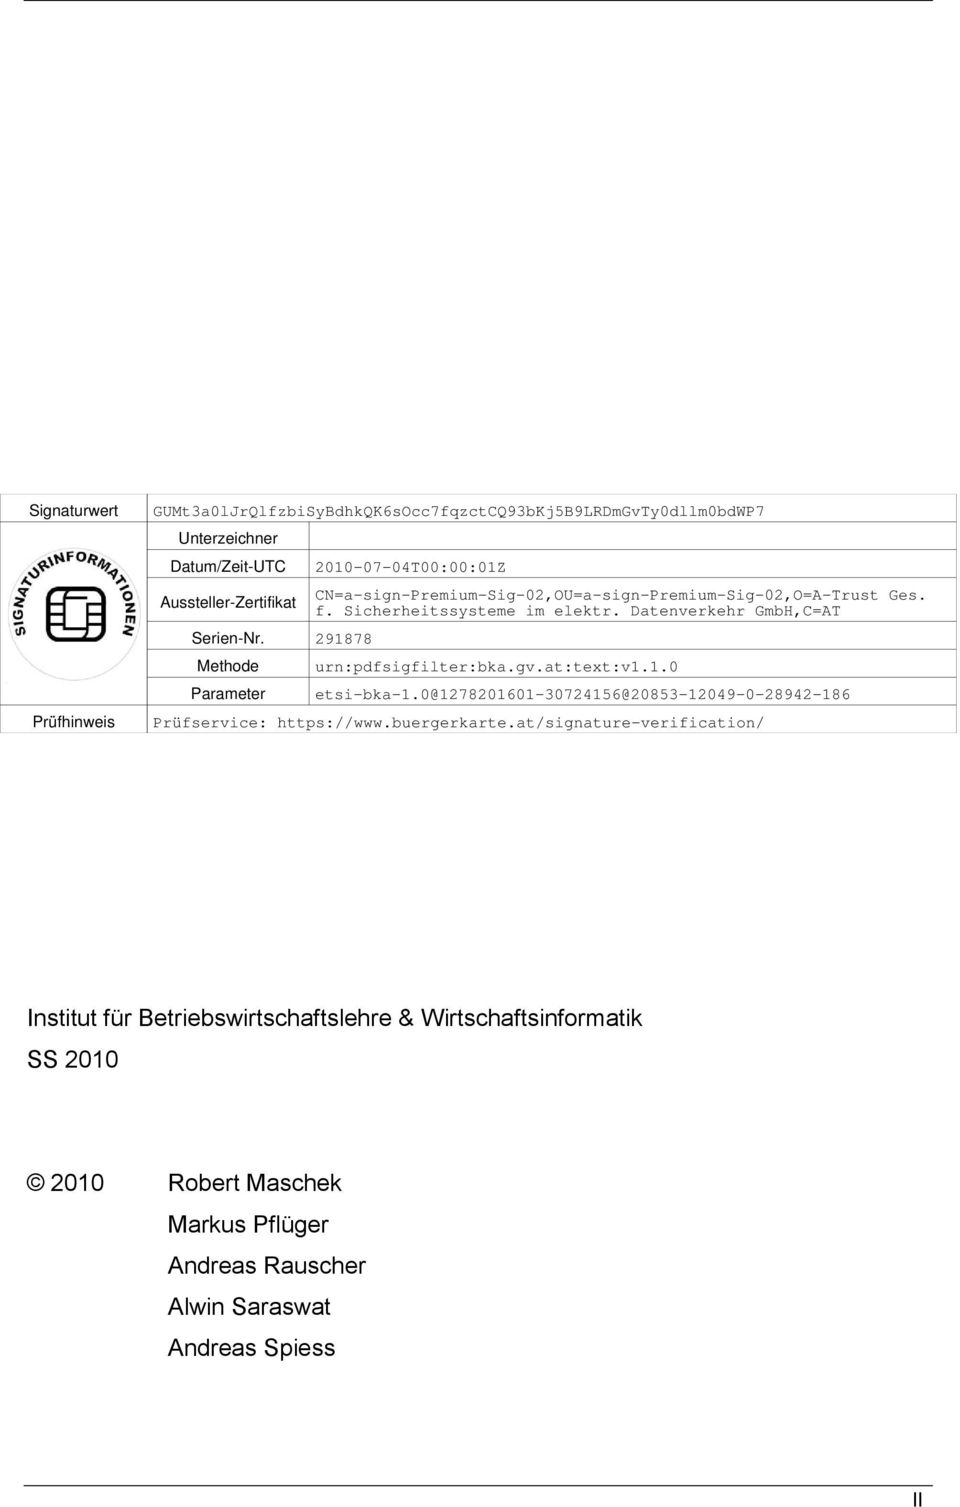 Datenverkehr GmbH,C=AT urn:pdfsigfilter:bka.gv.at:text:v1.1.0 etsi-bka-1.0@1278201601-30724156@20853-12049-0-28942-186 Prüfservice: https://www.buergerkarte.